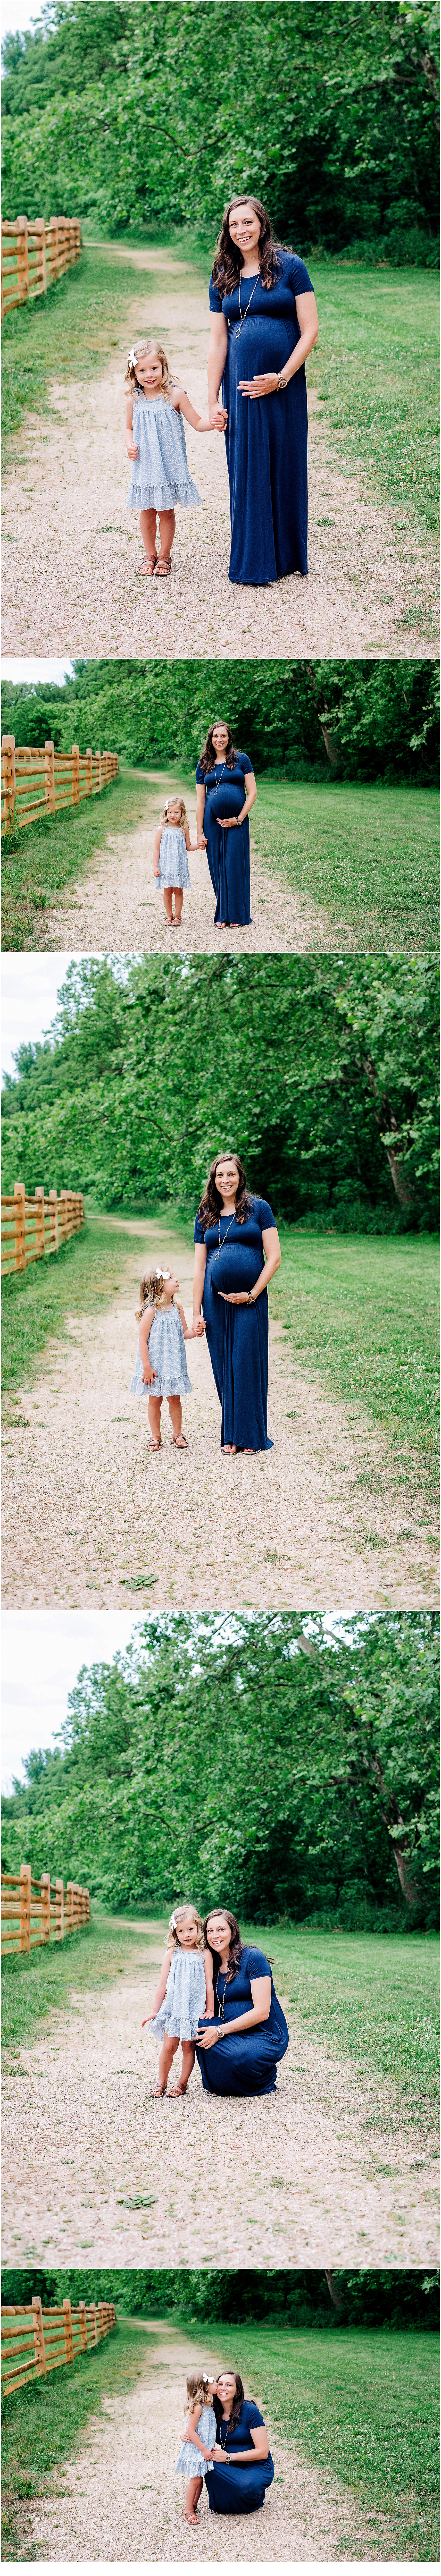 Leesburg Virginia Maternity Photographer